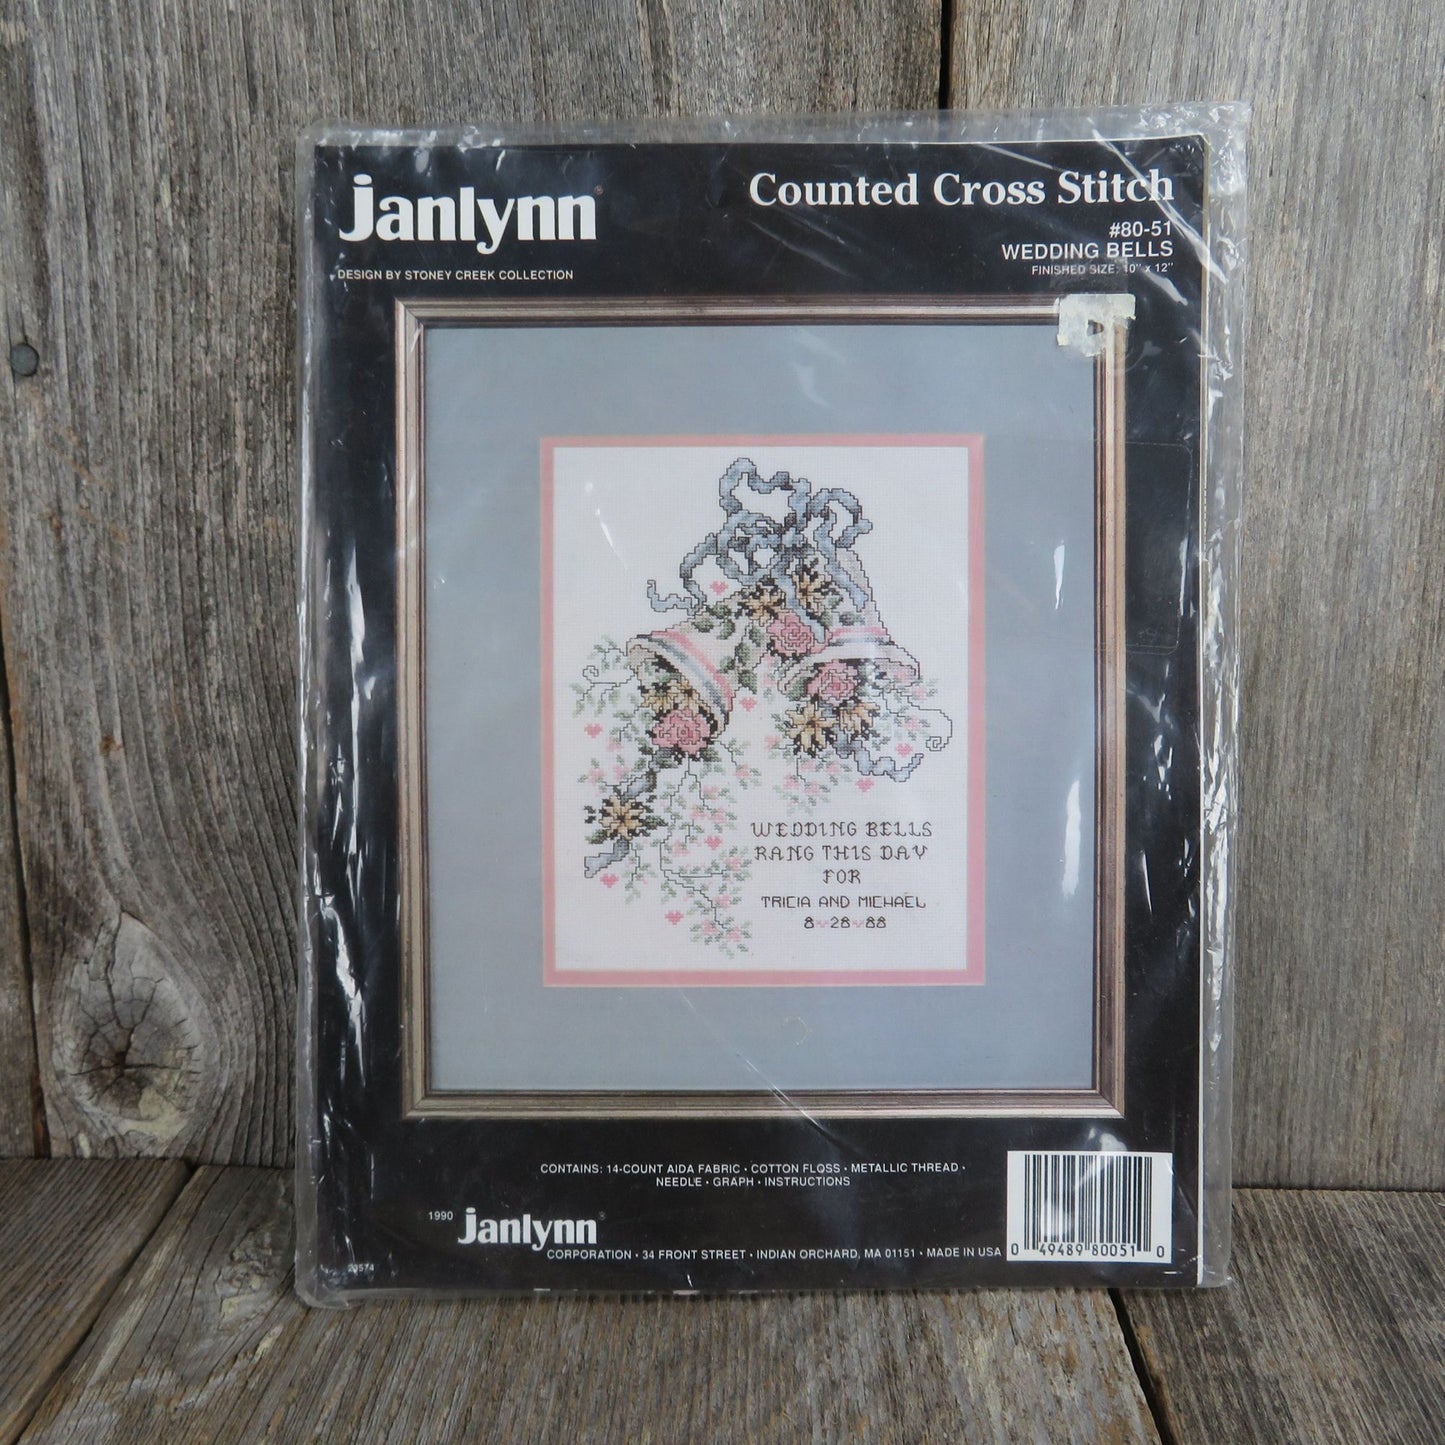 Janlynn Counted Cross Stitch Wedding Bells 1990 Wedding Anniversary Gift 80-51